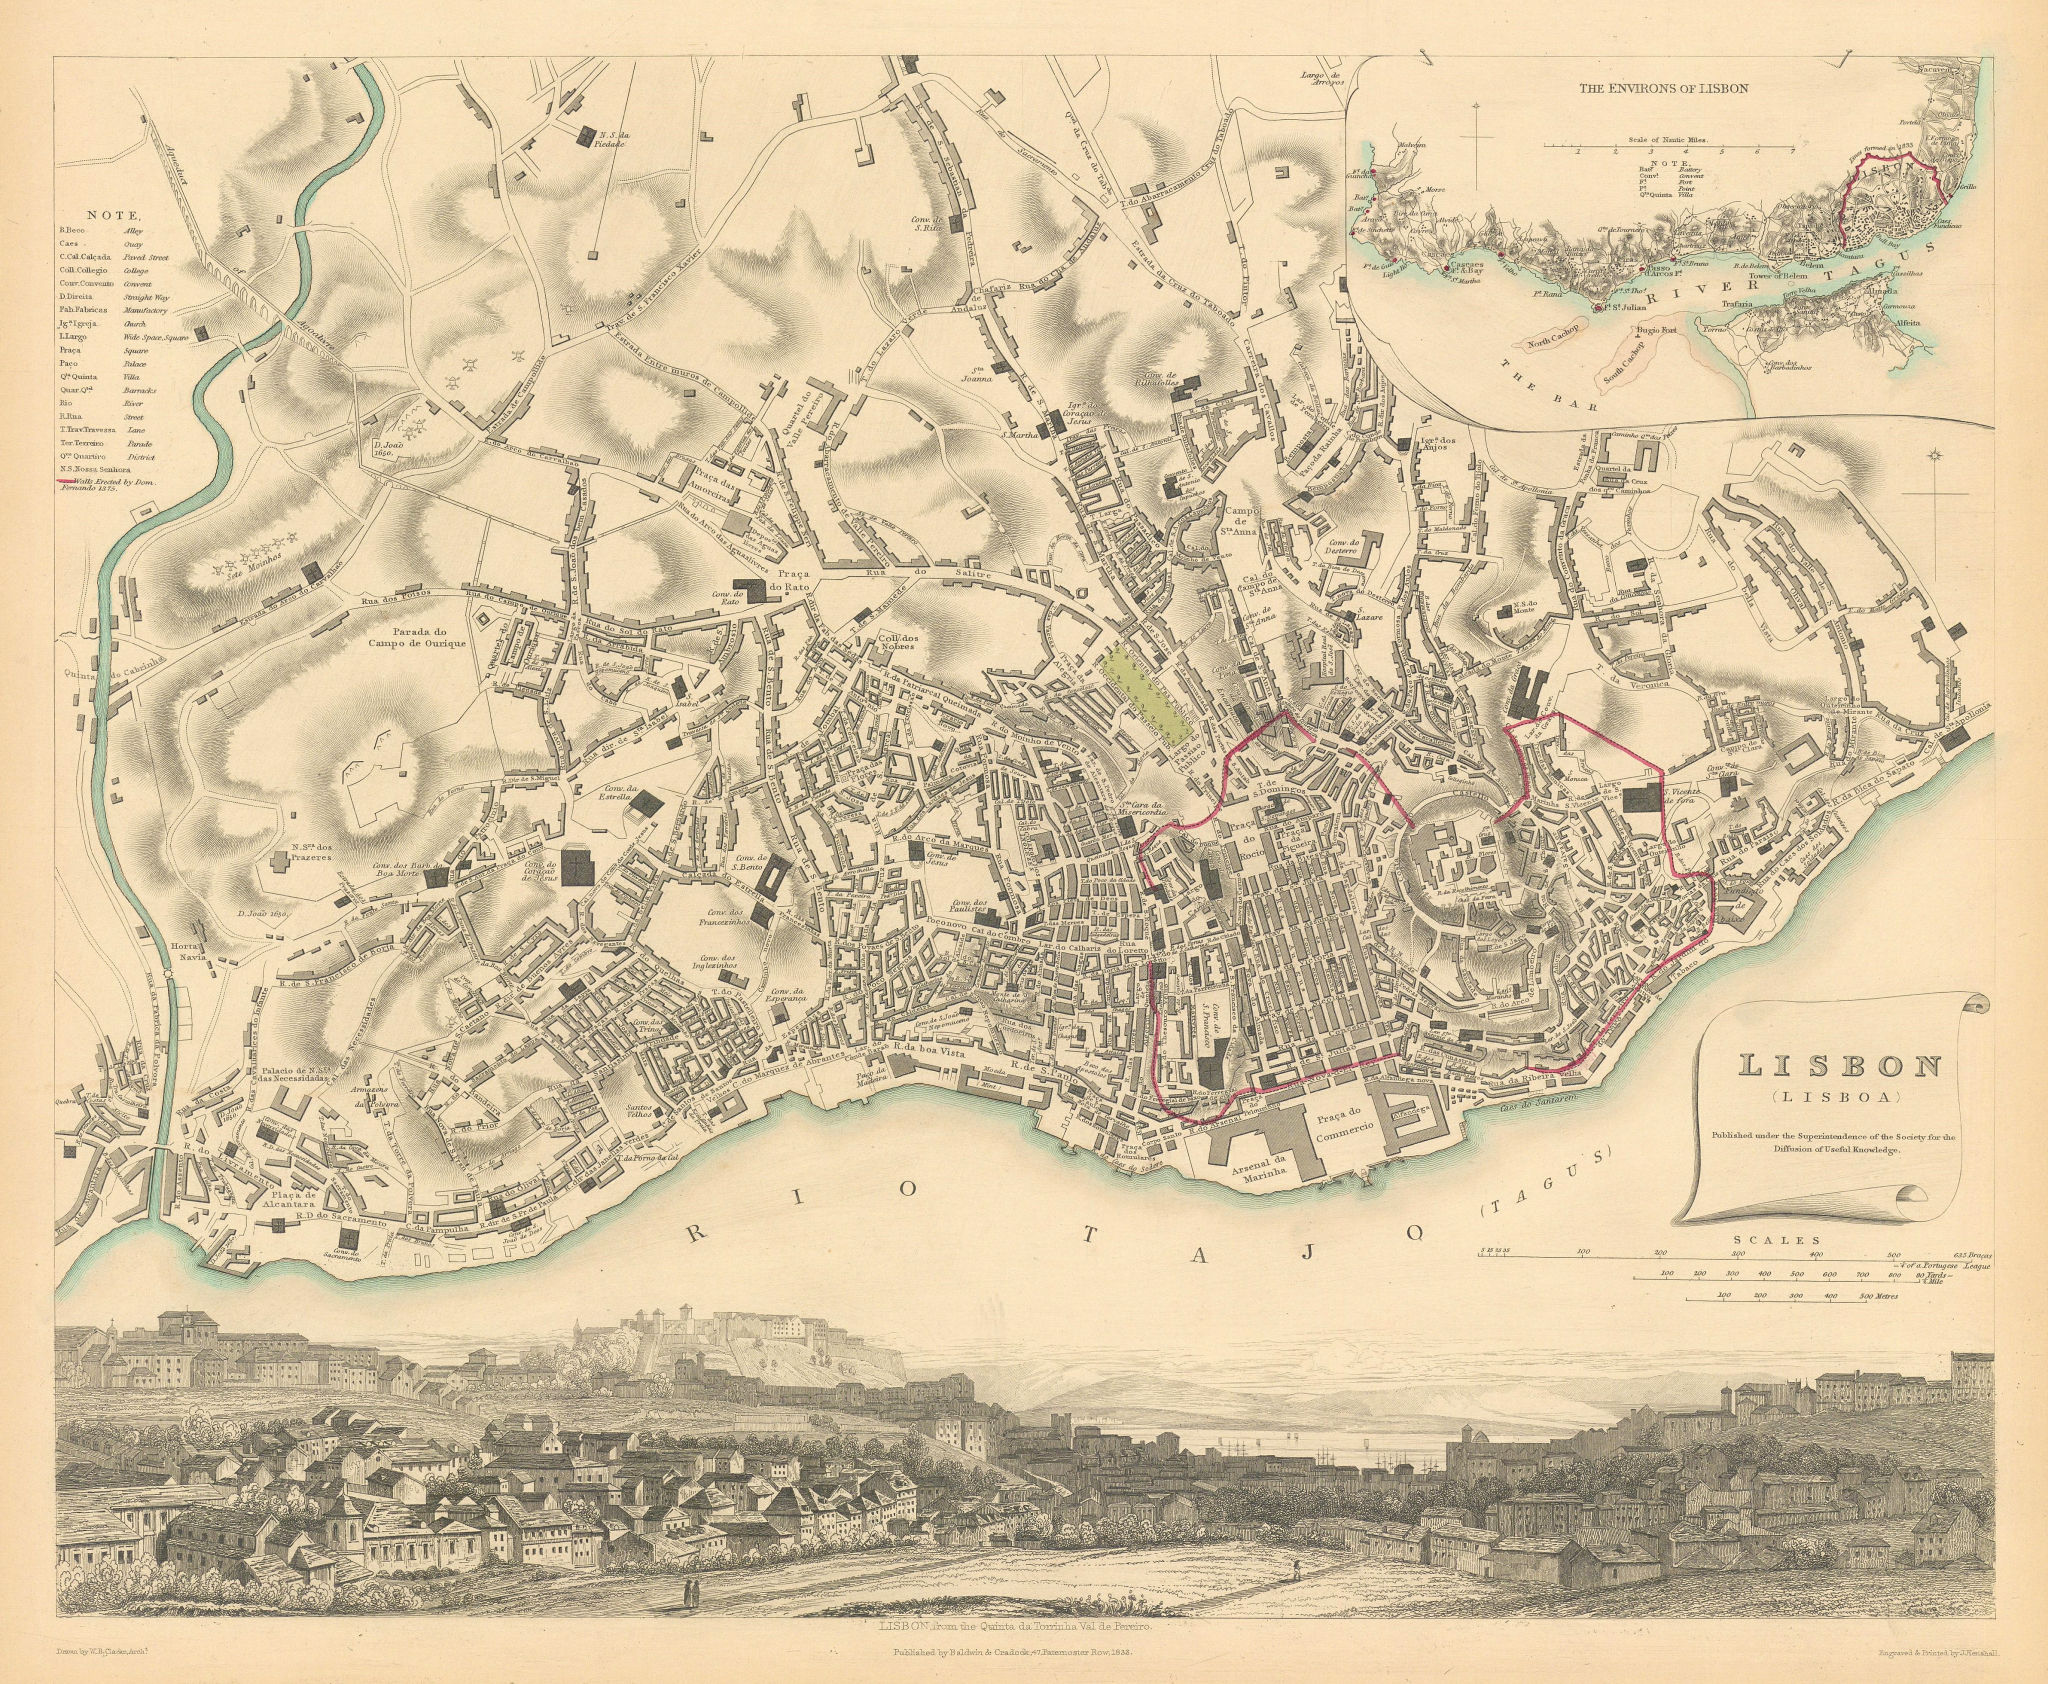 LISBON LISBOA. Antique town city map plan. Inset environs. Panorama. SDUK 1844